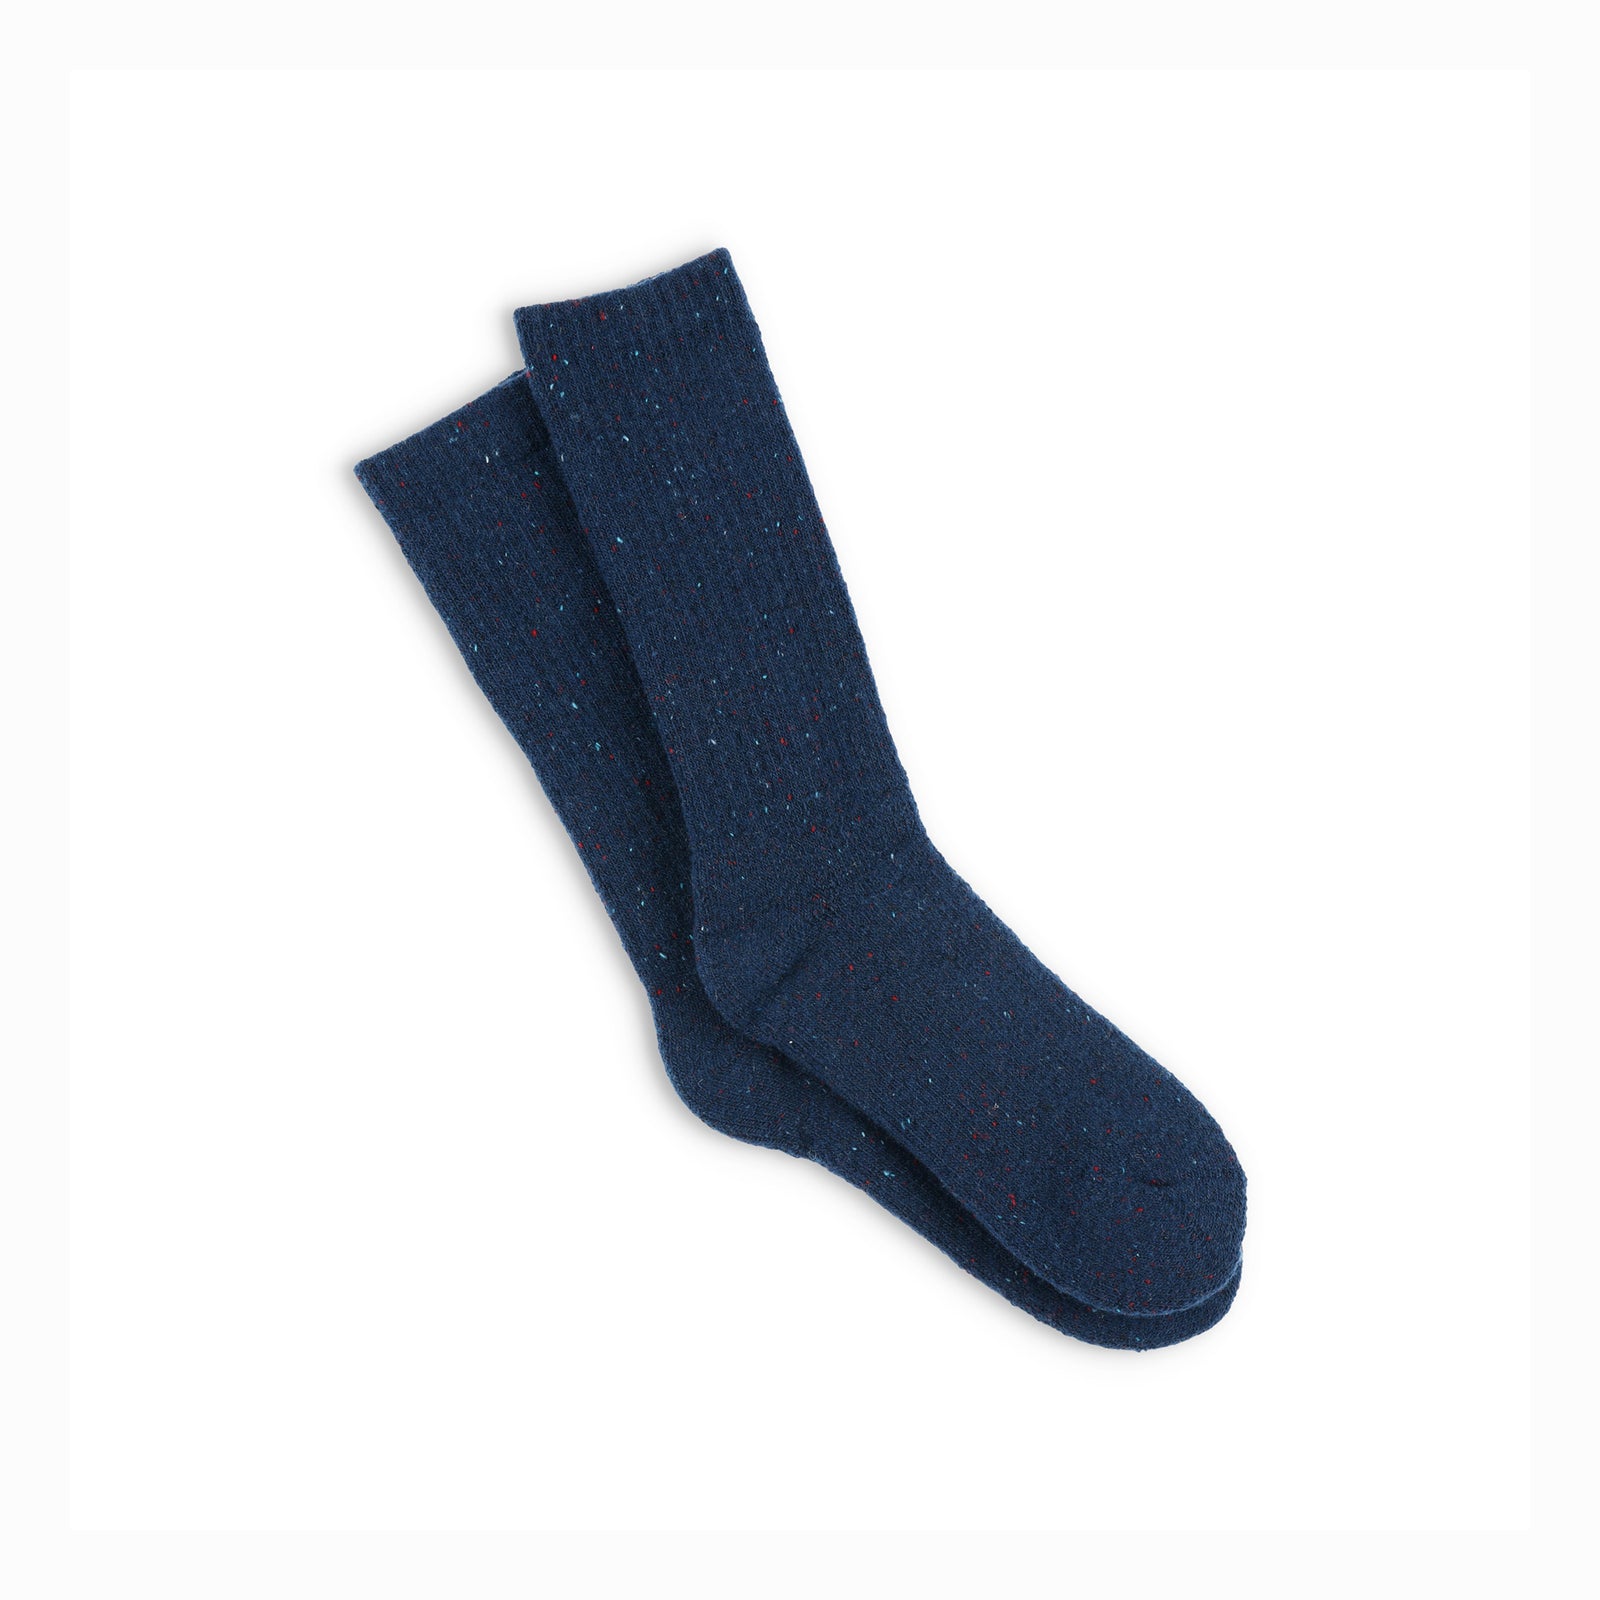 Topo Designs Mountain heavyweight wool blend hiking Socks in "Pond Blue"